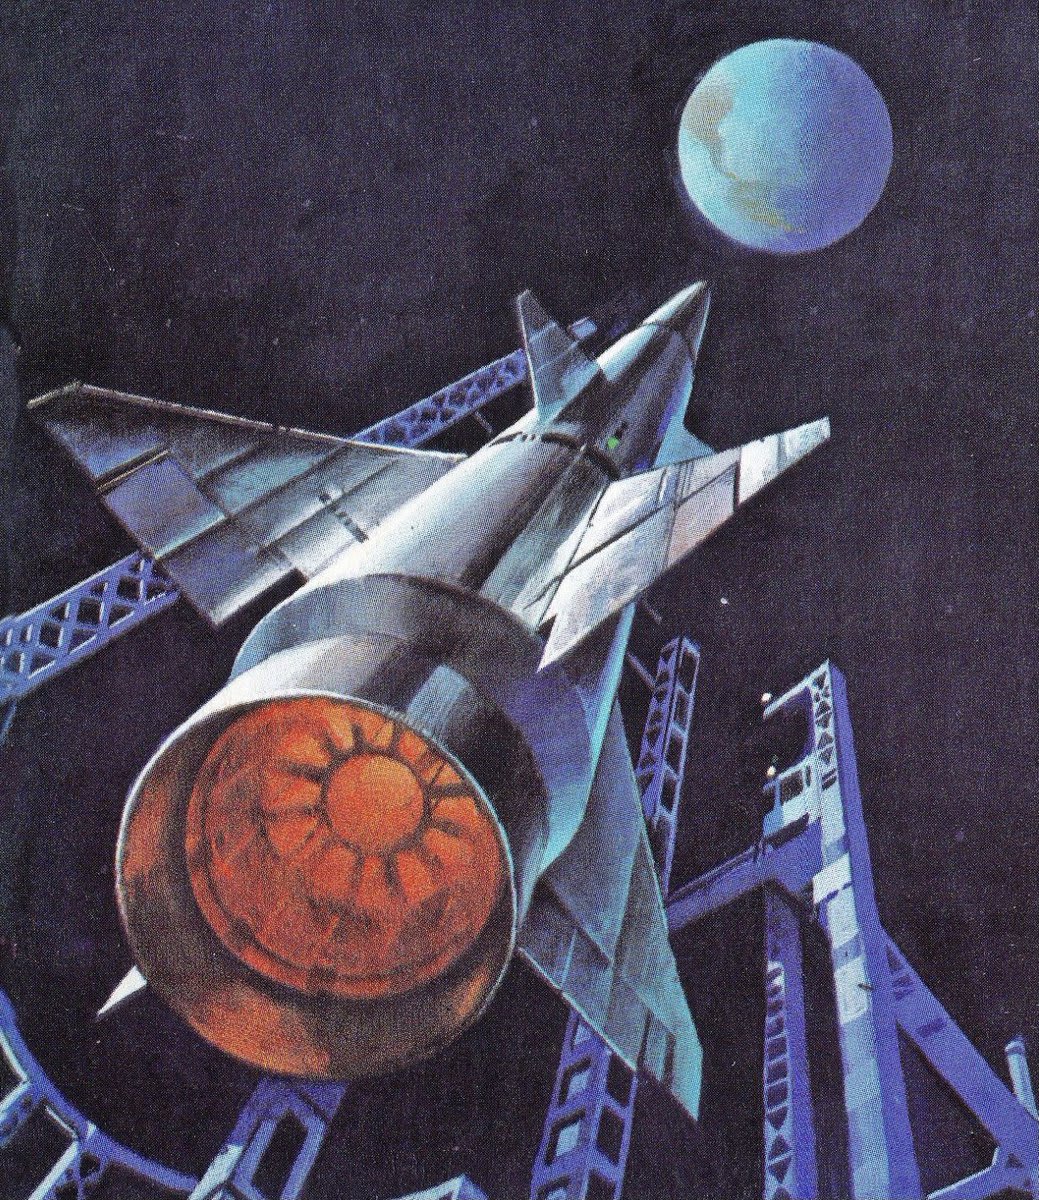 Bruce Pennington’s cover art for “The Moon Is a Harsh Mistress” by Robert A. Heinlein, 1969.